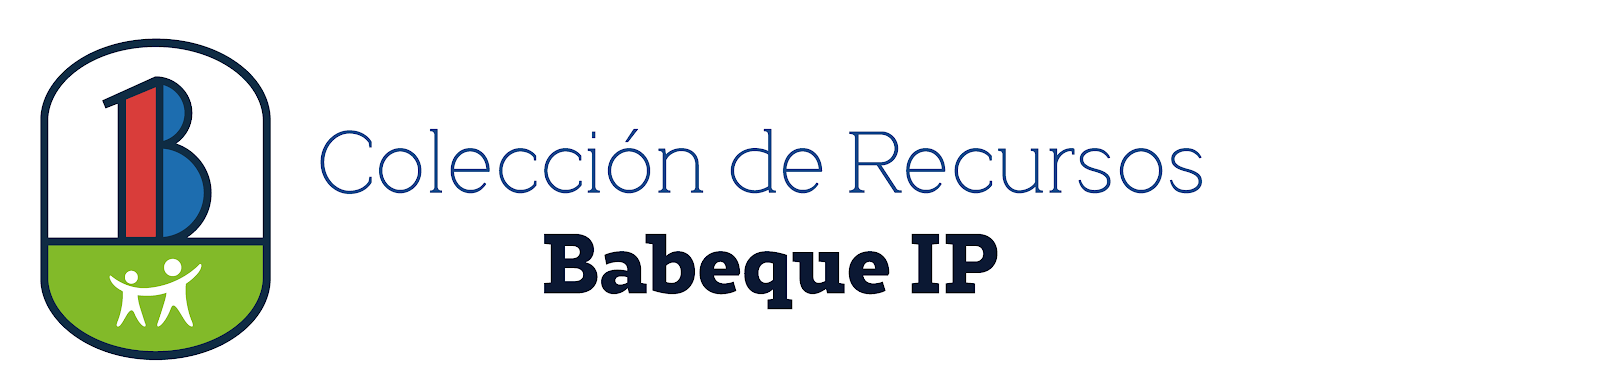 Babeque IP Blog